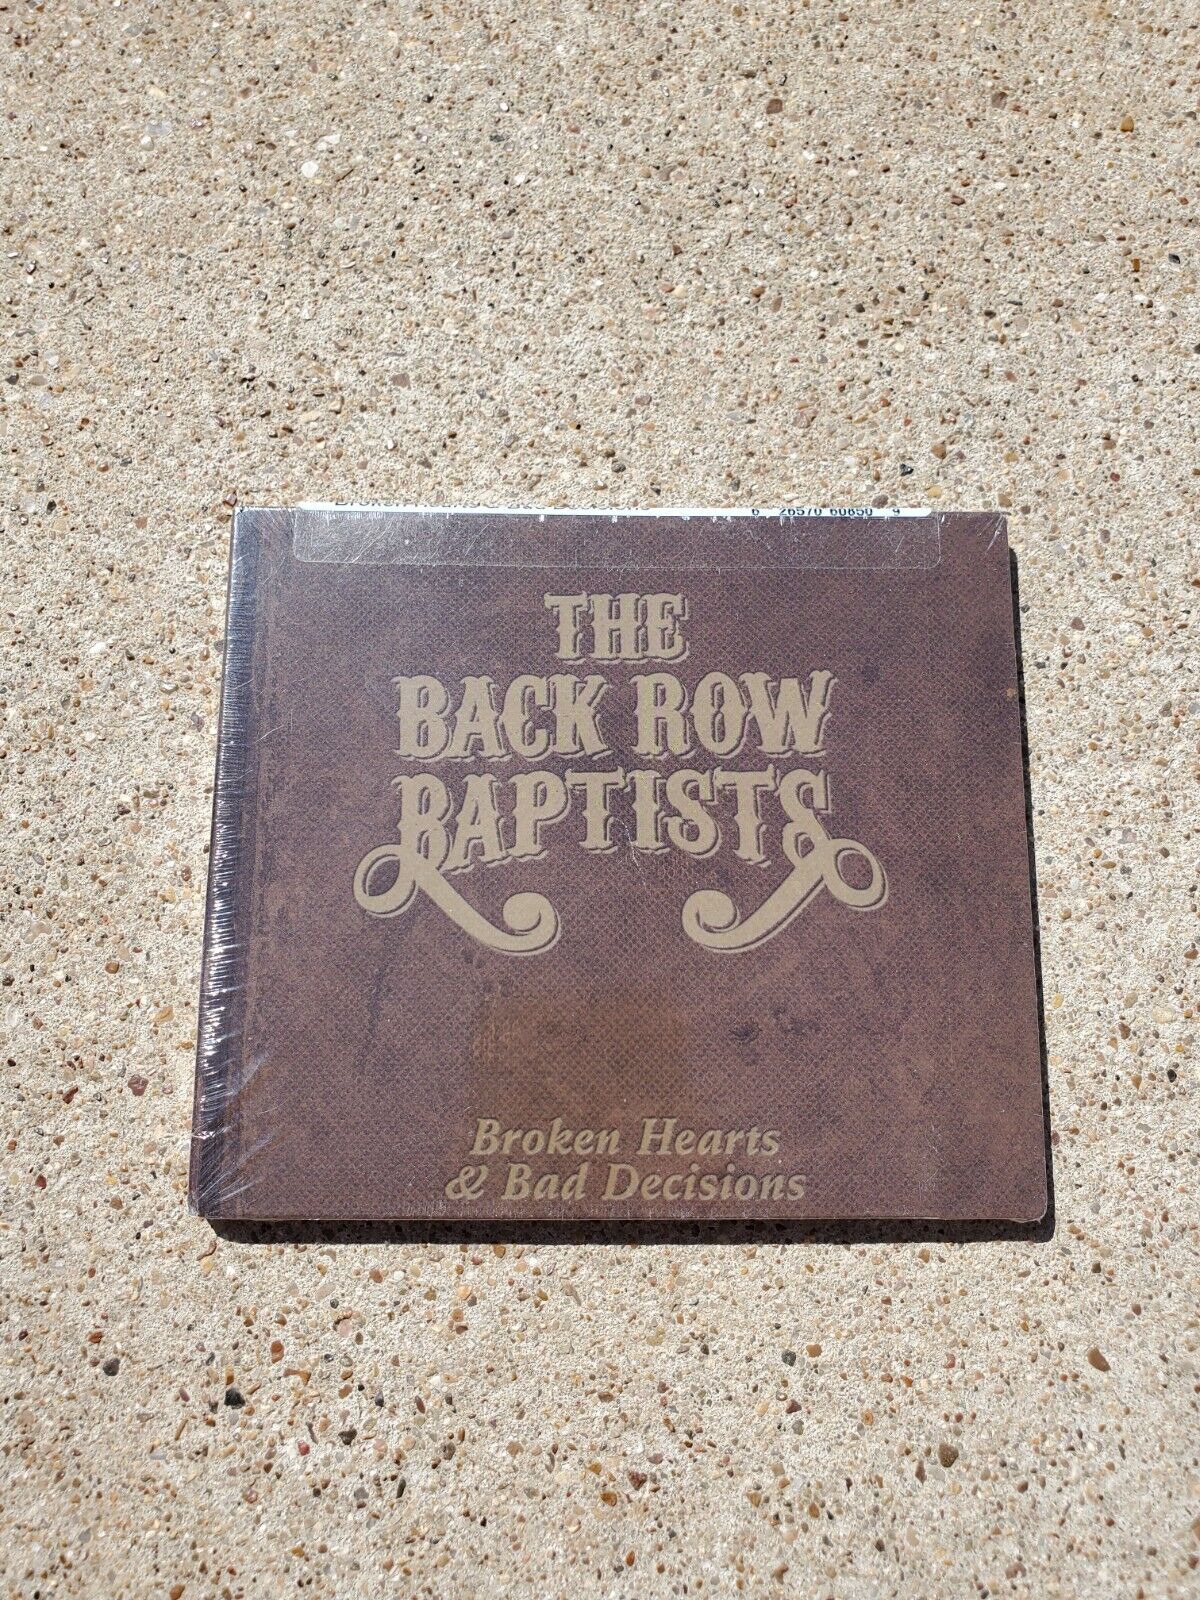 New Broken Hearts & Bad Decisions The Back Row Baptists CD 2010 Chris Porter 